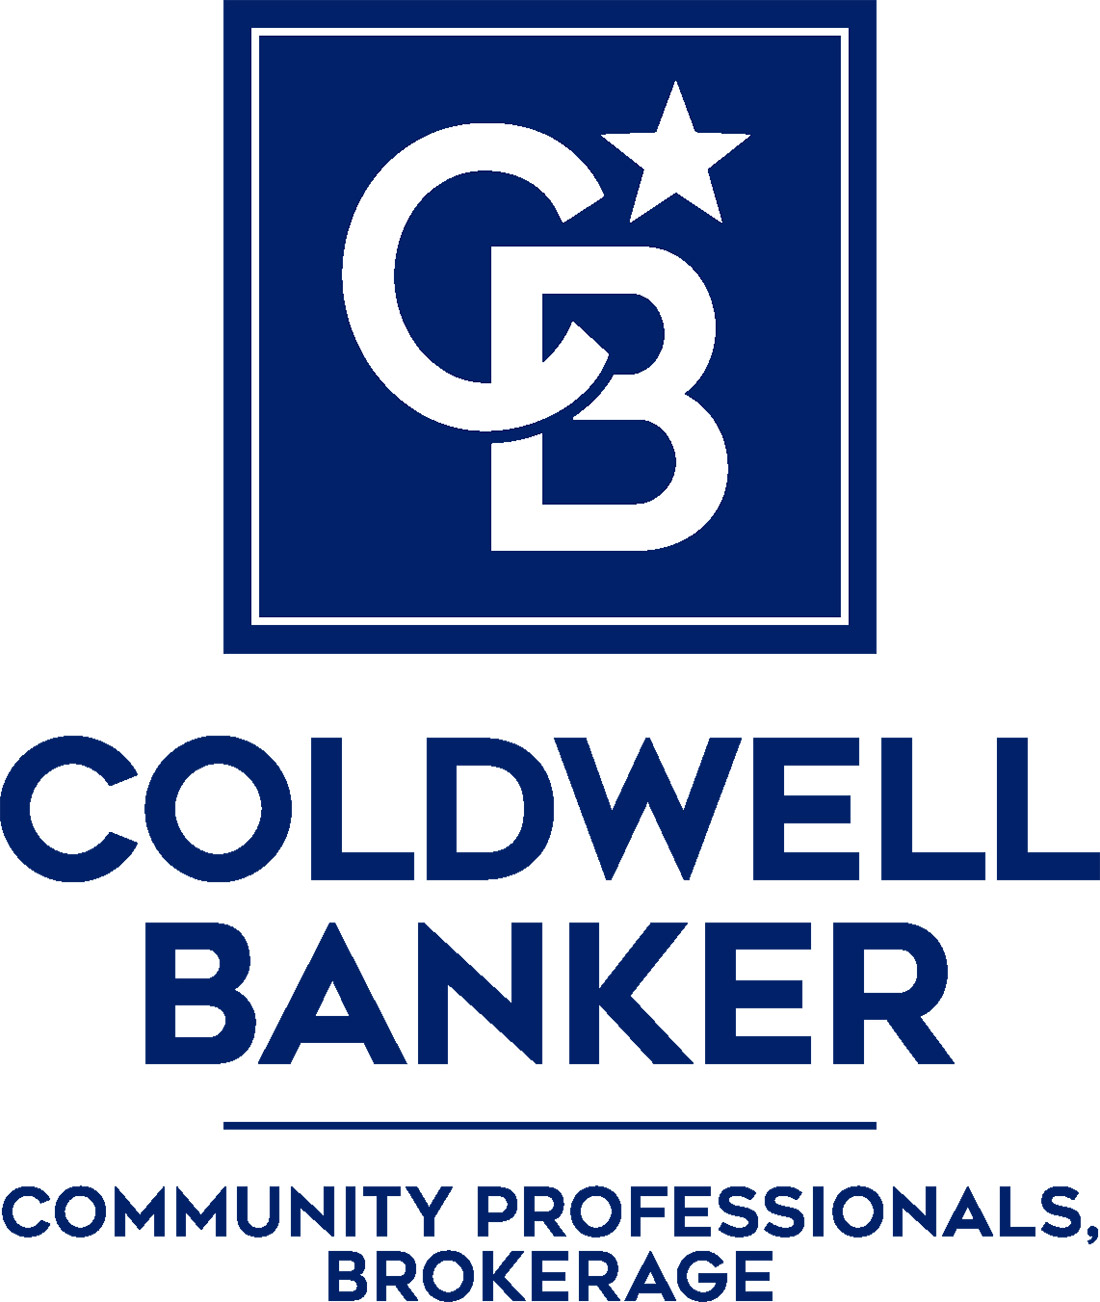 Rejeanne LeBlanc - Coldwell Banker Community Professionals Logo